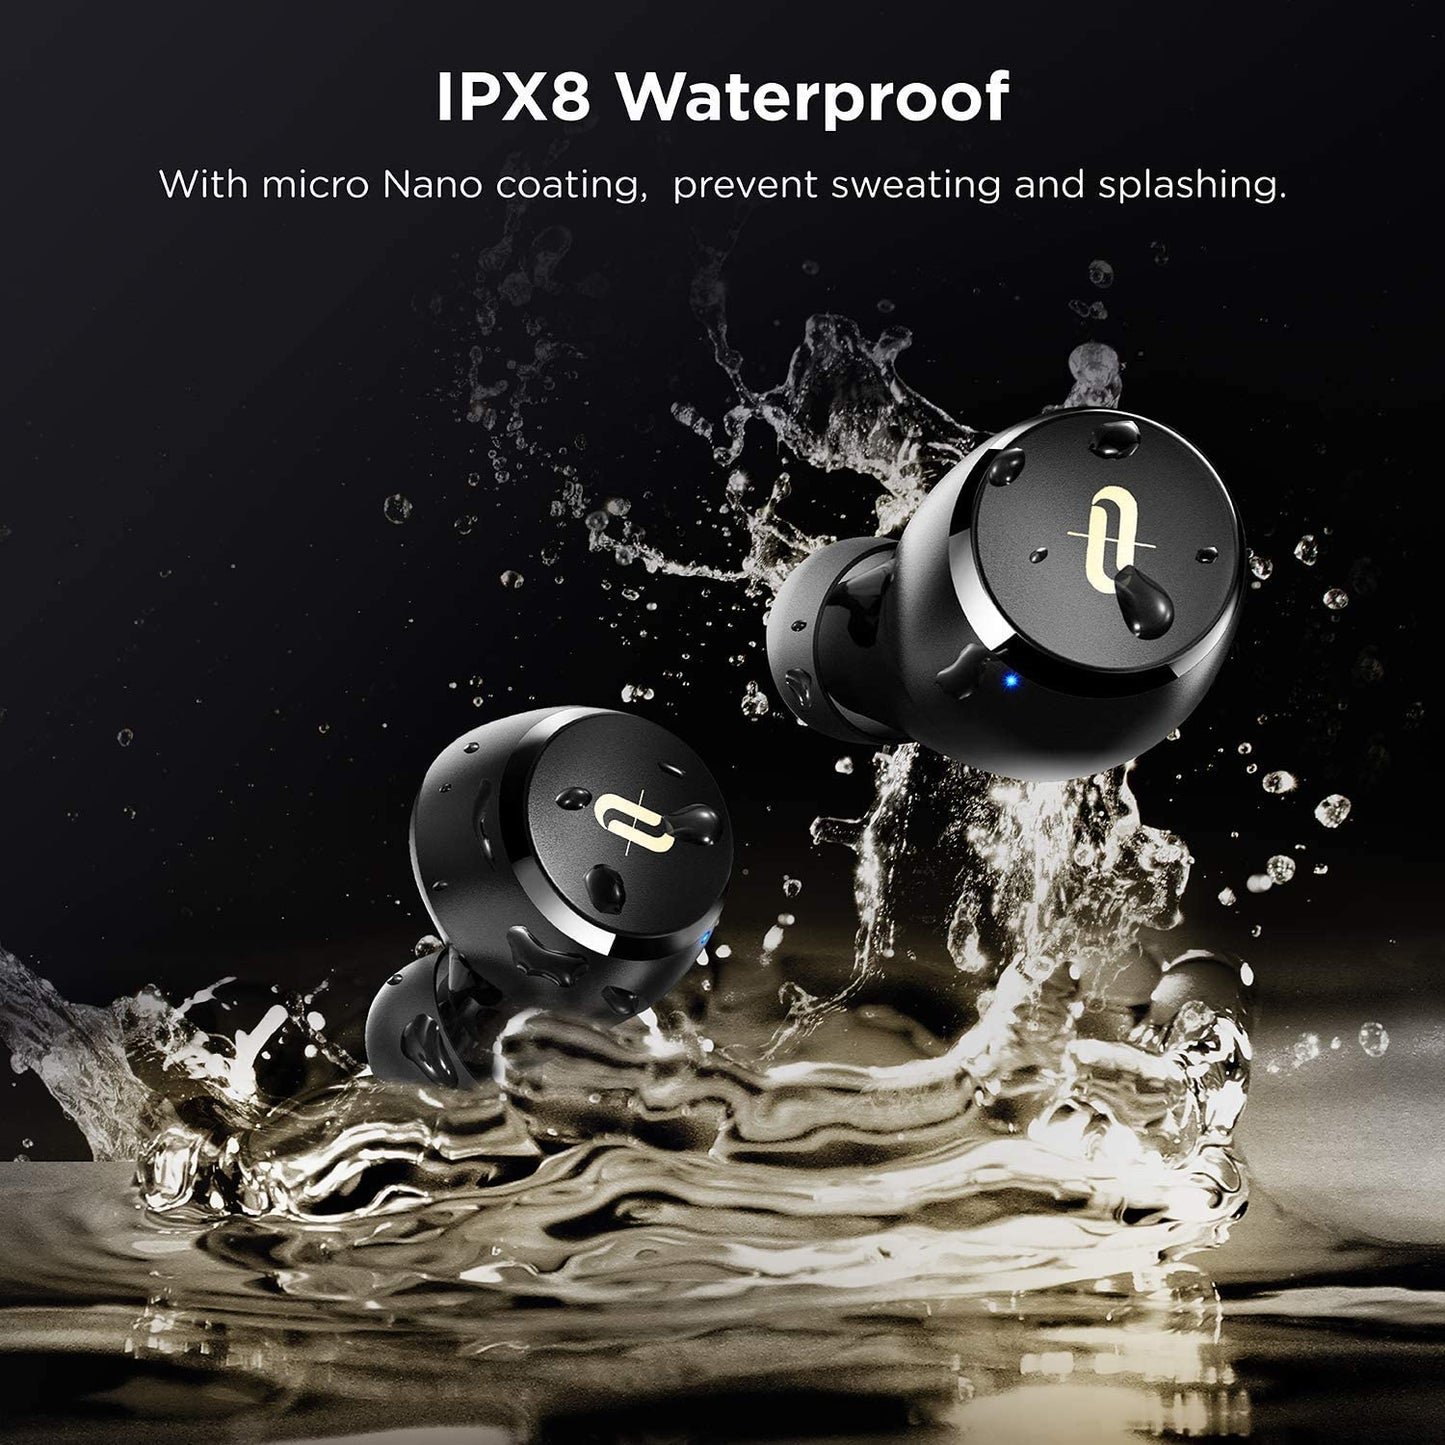 TaoTronics SoundLiberty 97 True Wireless Earbuds Bluetooth 5.0 IPX8 Waterproof Earphones with 9h Playtime AptX Stereo Bass TT-BH097